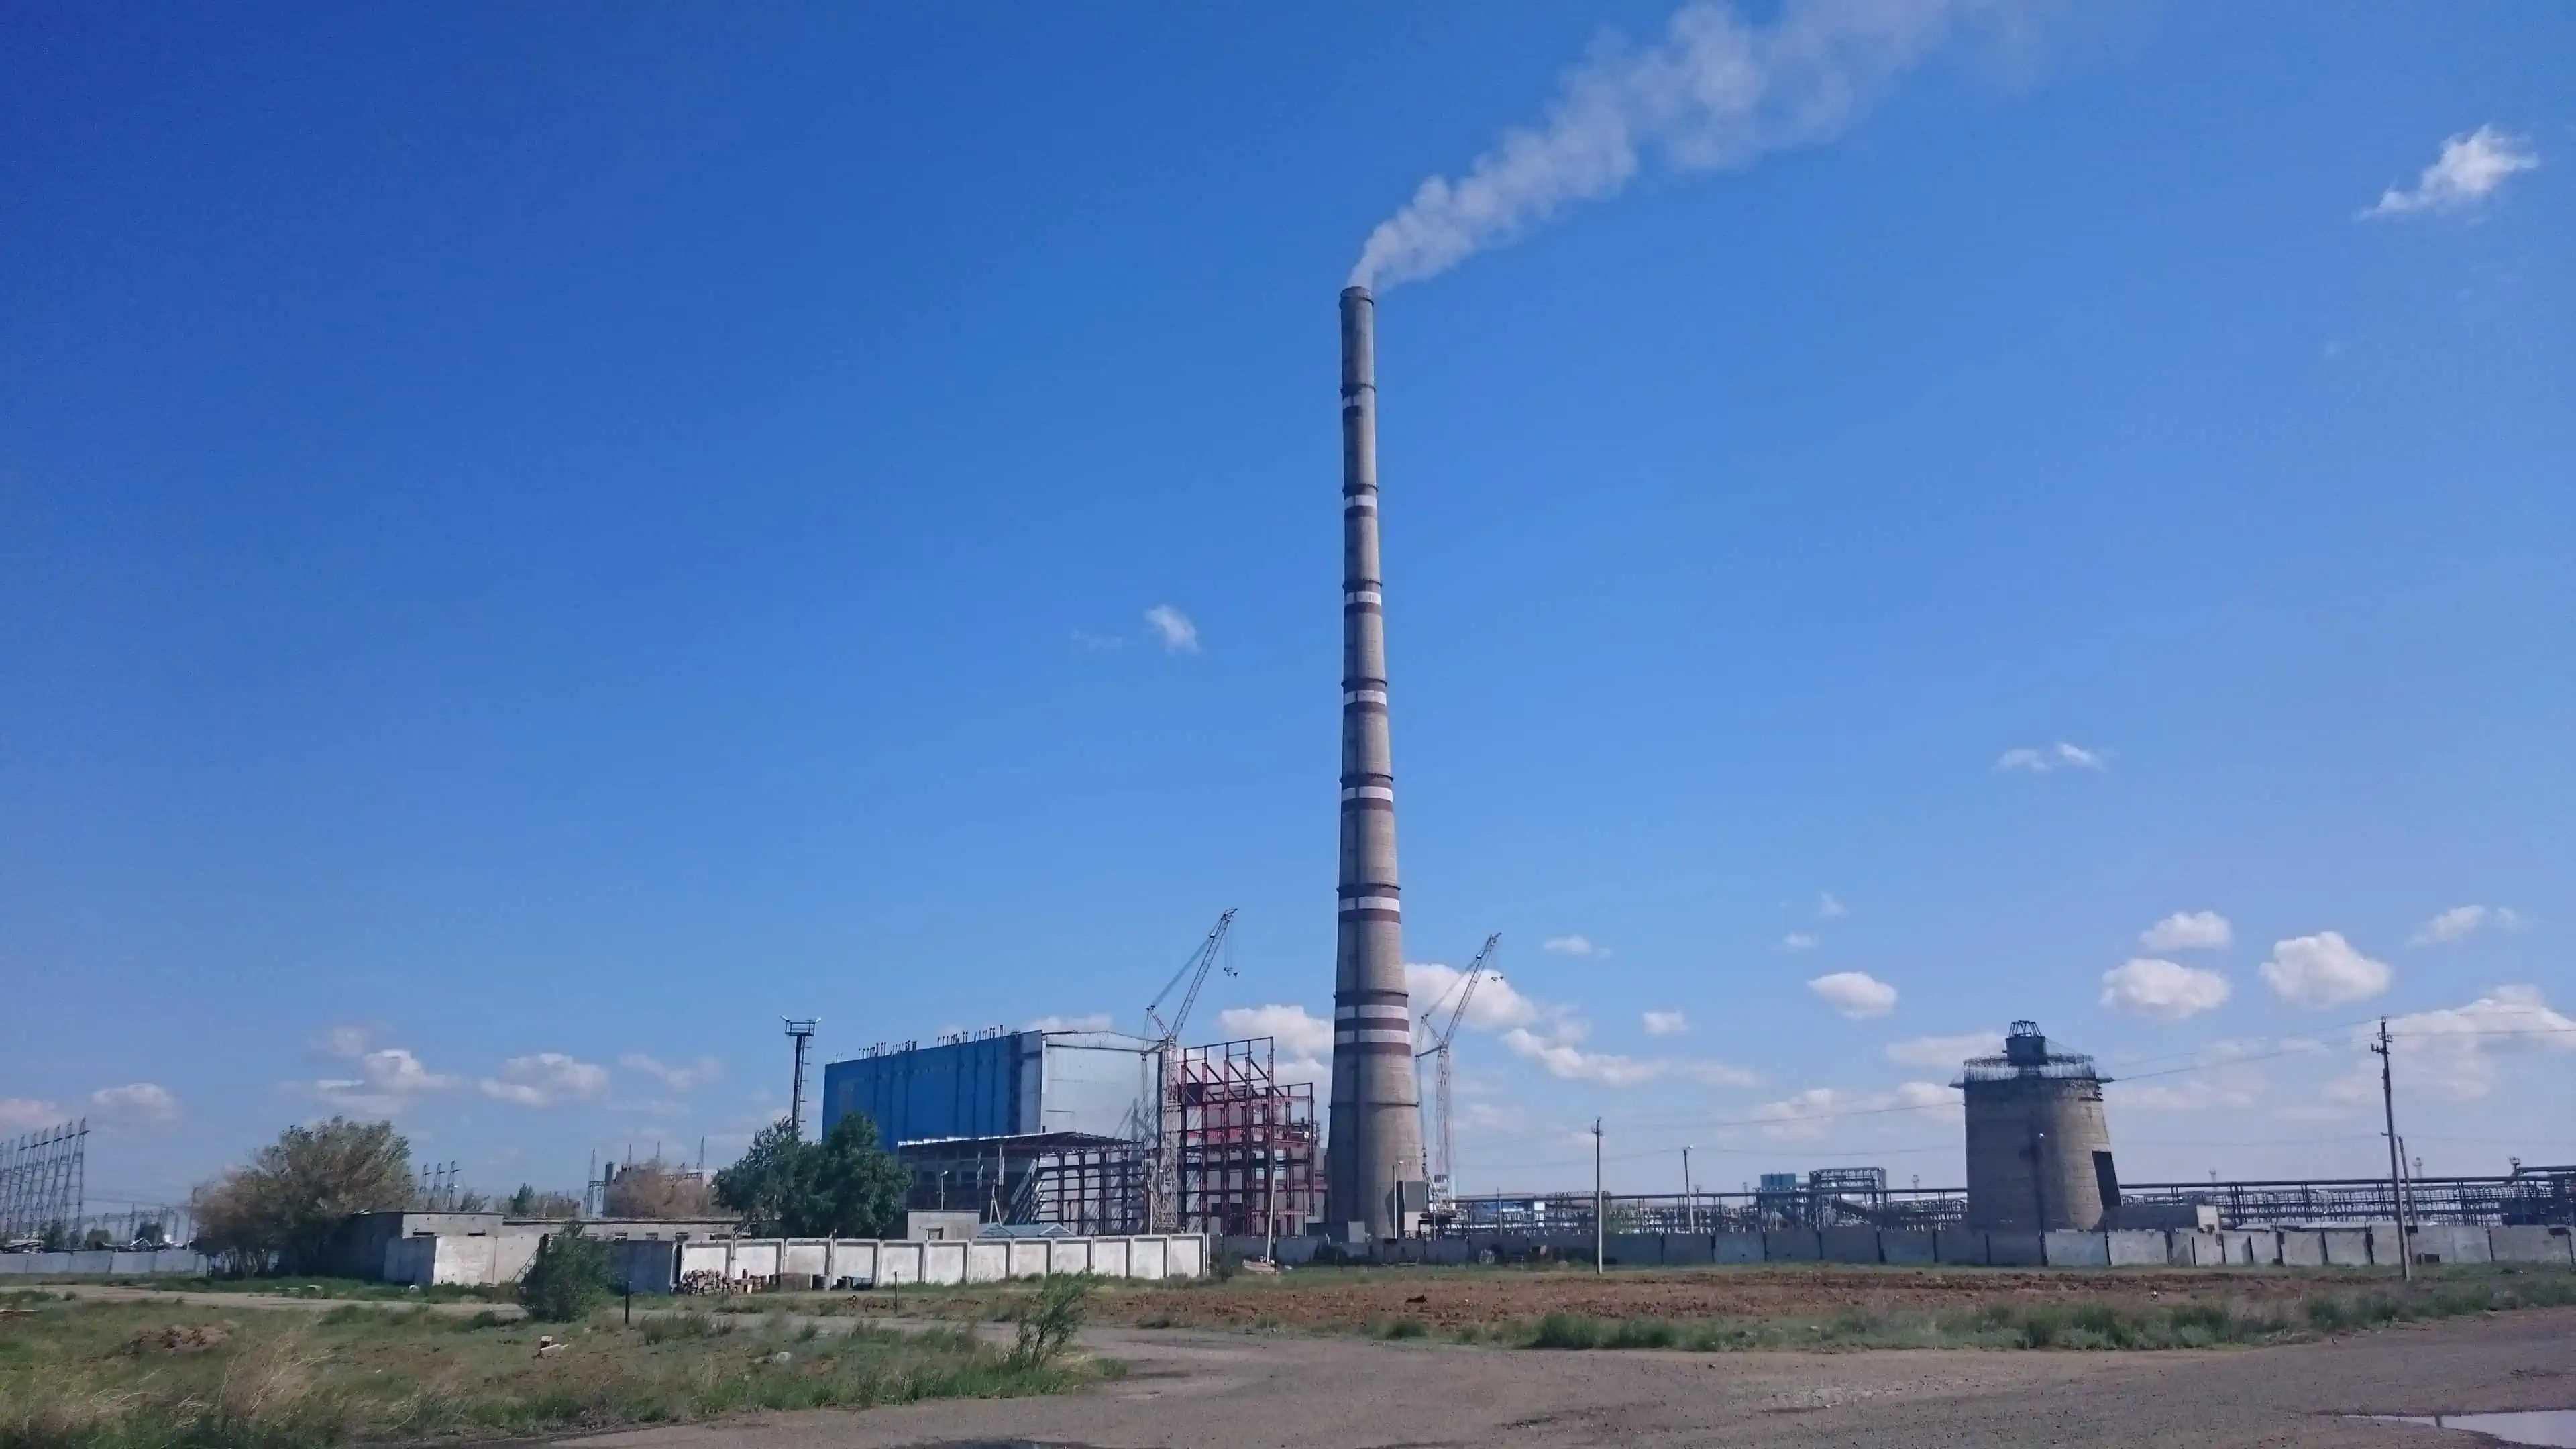 gres 2 power station ekibastuz kazakhstan tallest chimney in the world